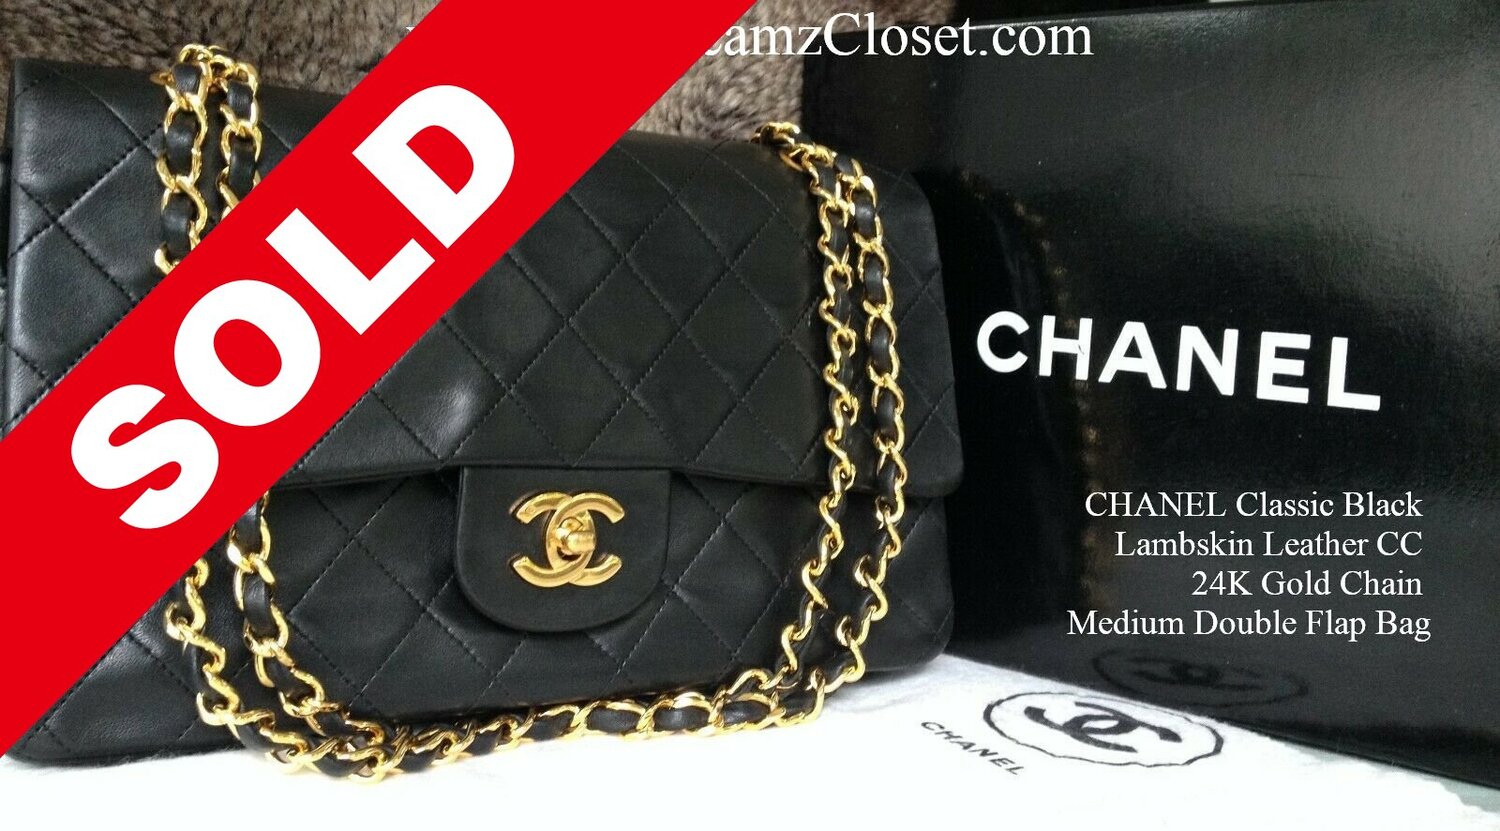 CHANEL Classic Black Lambskin Leather CC 24K Gold Chain